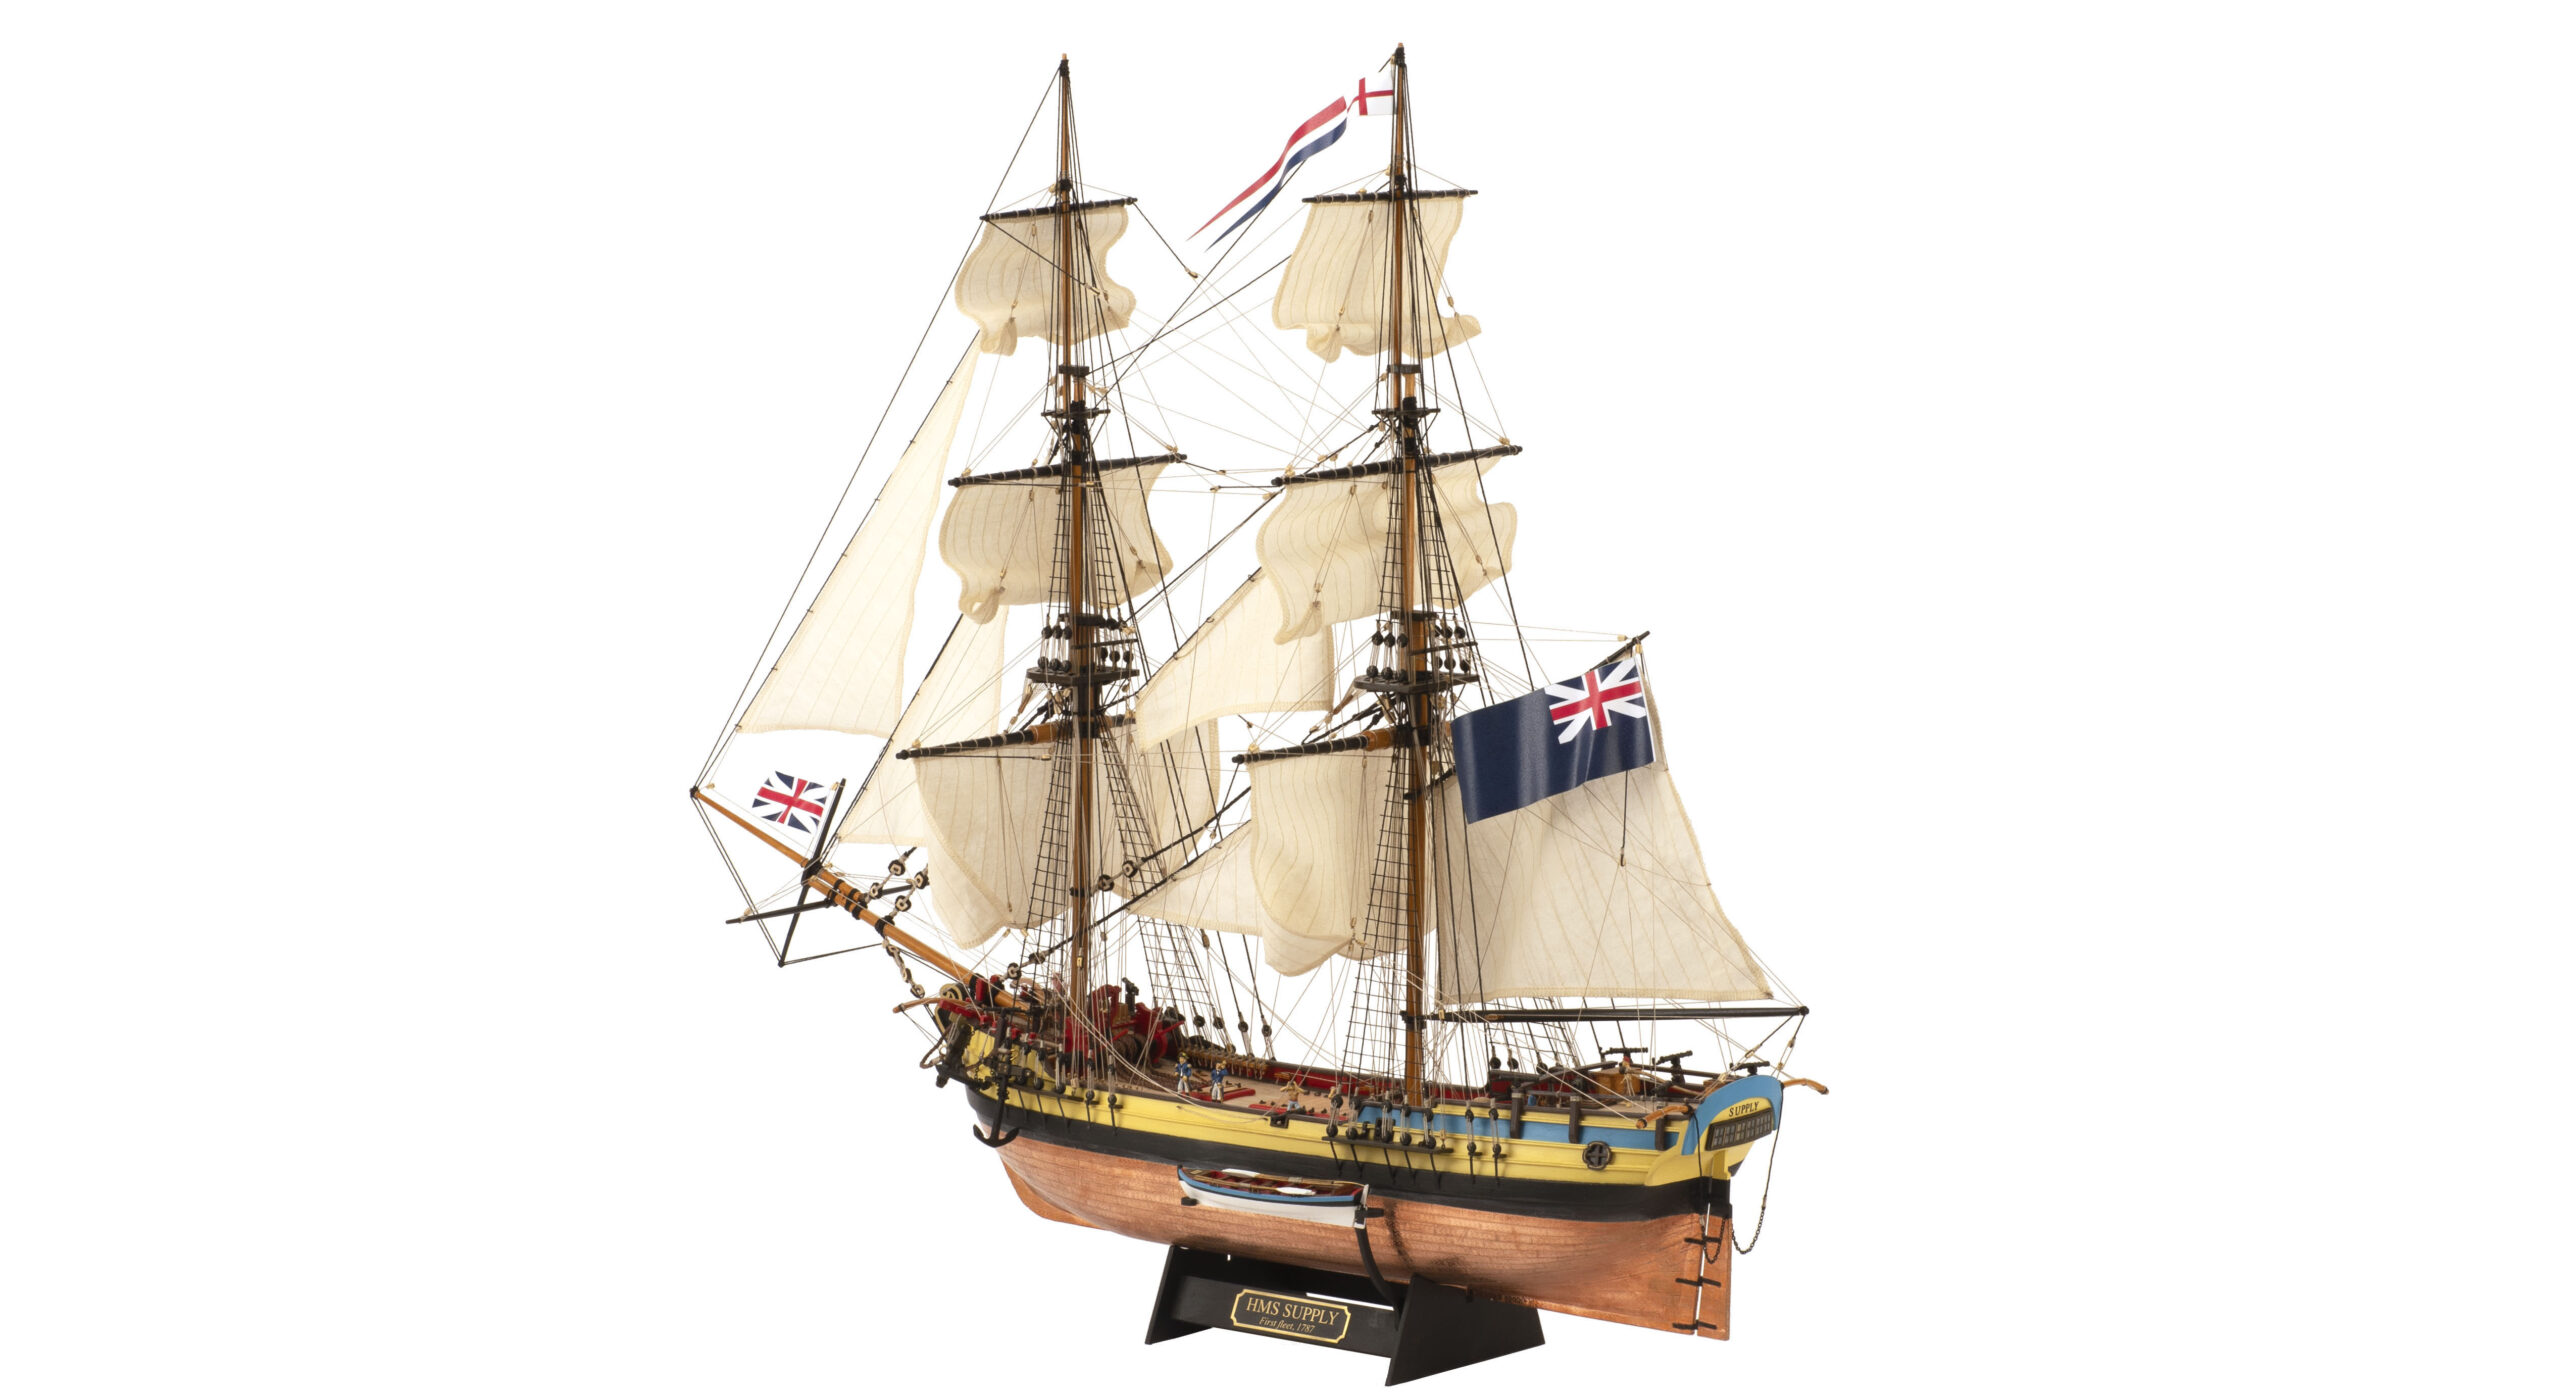 HMS Supply Model Ship Kit in Wood, First Fleet Edition 1787 (22420) by Artesanía Latina.